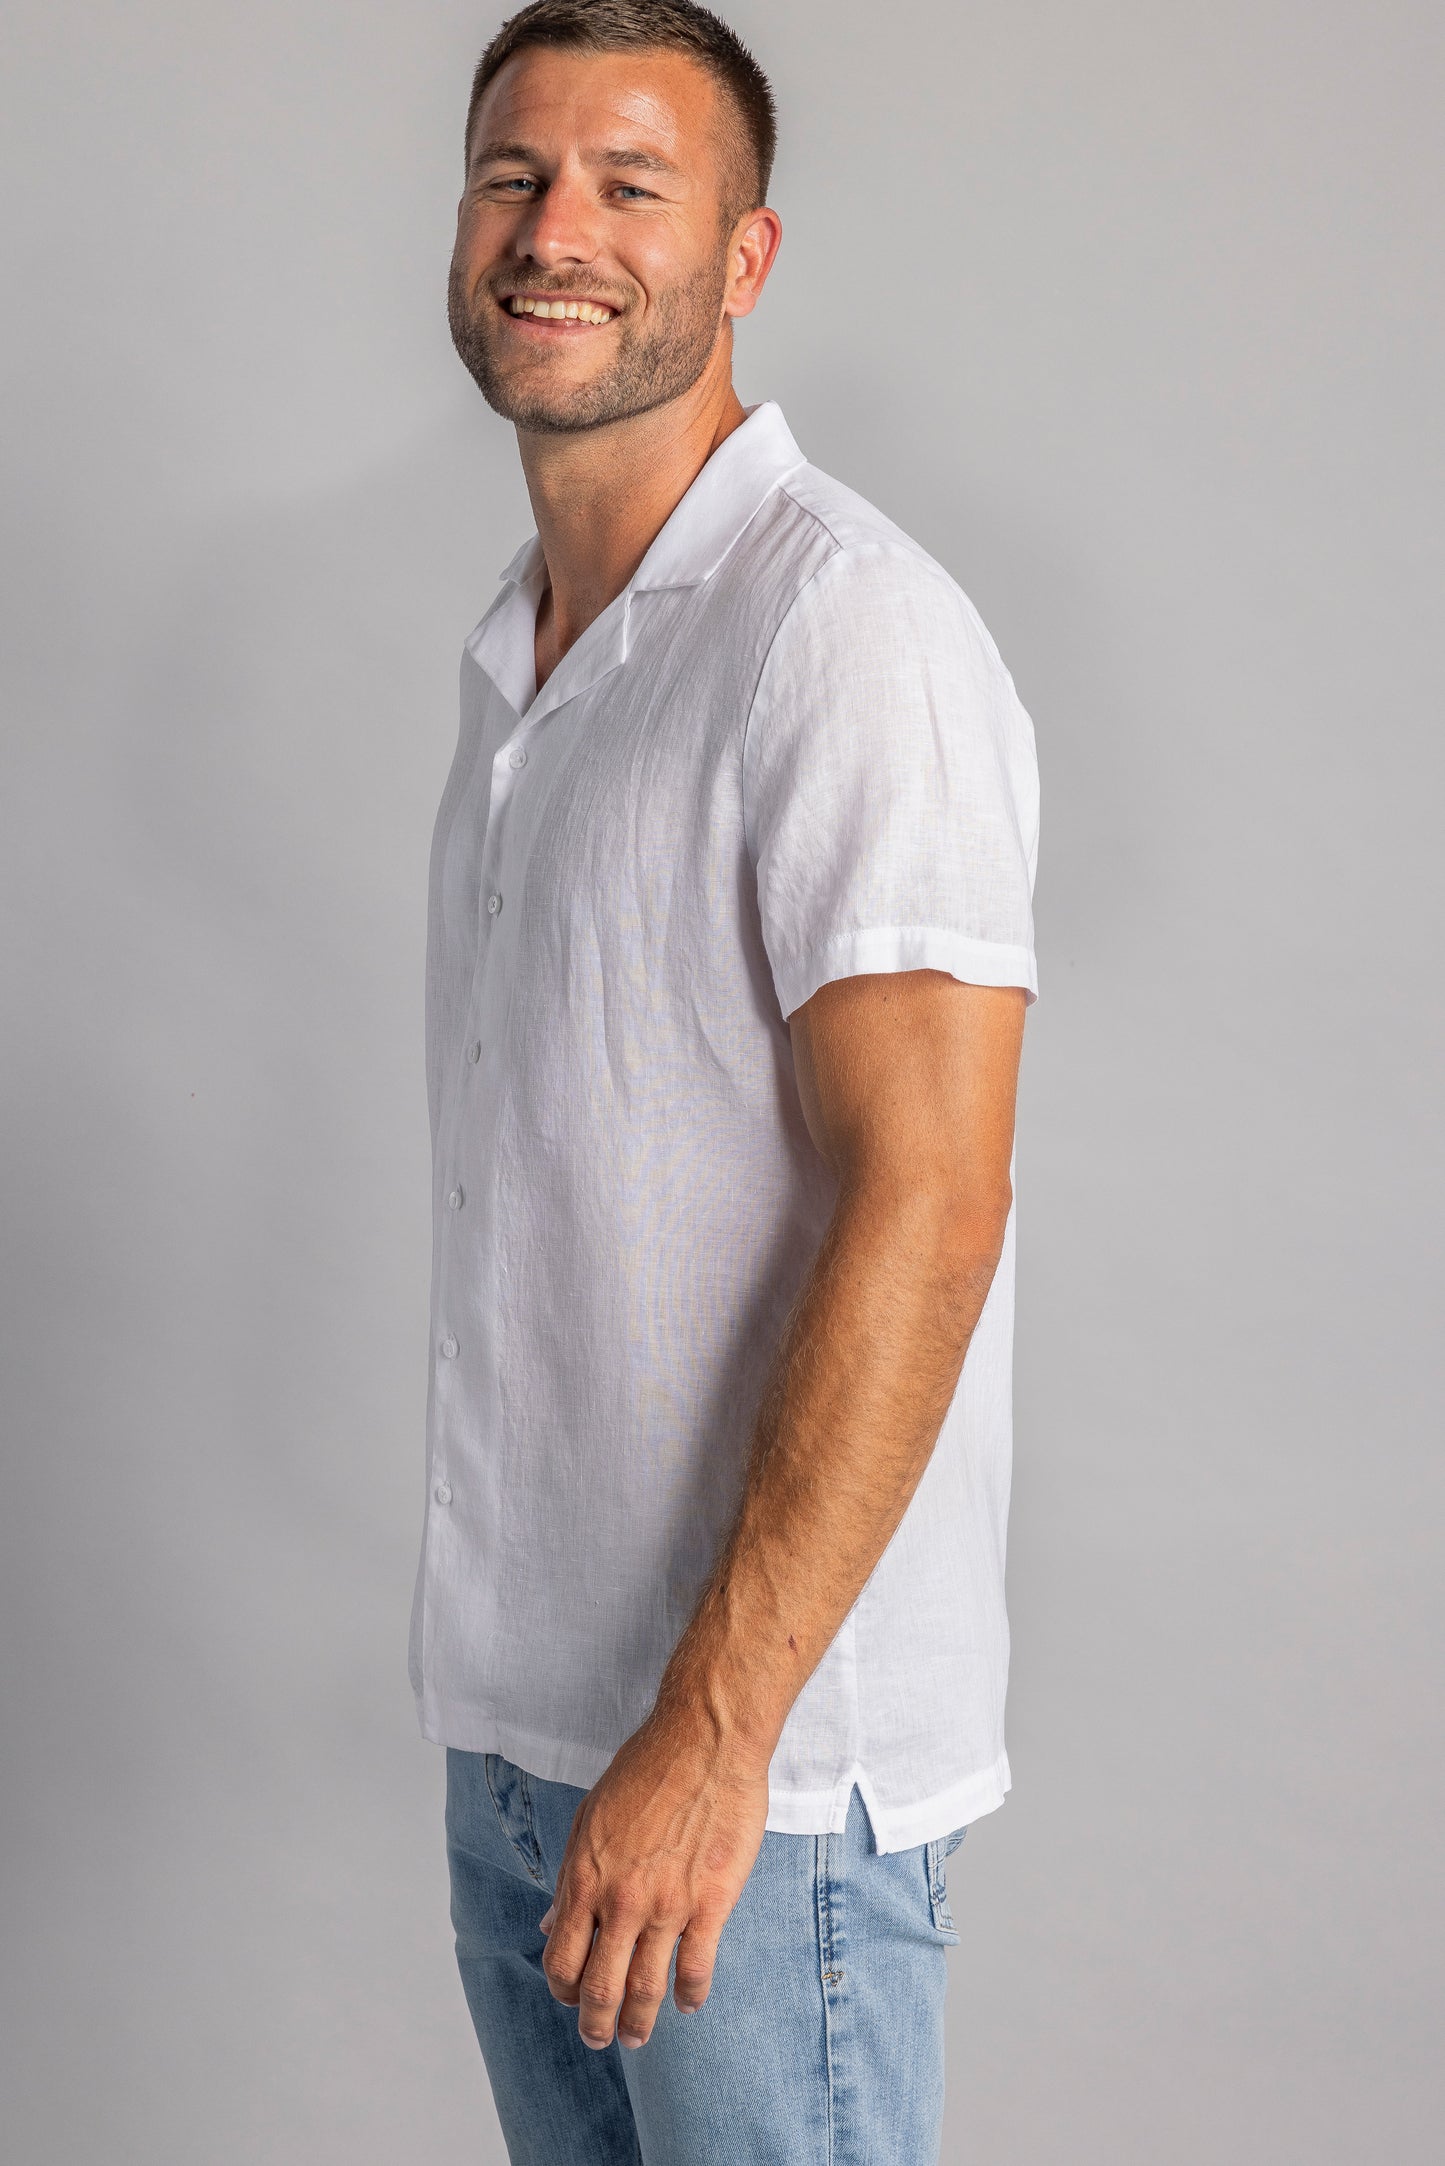 Linen shirt, white